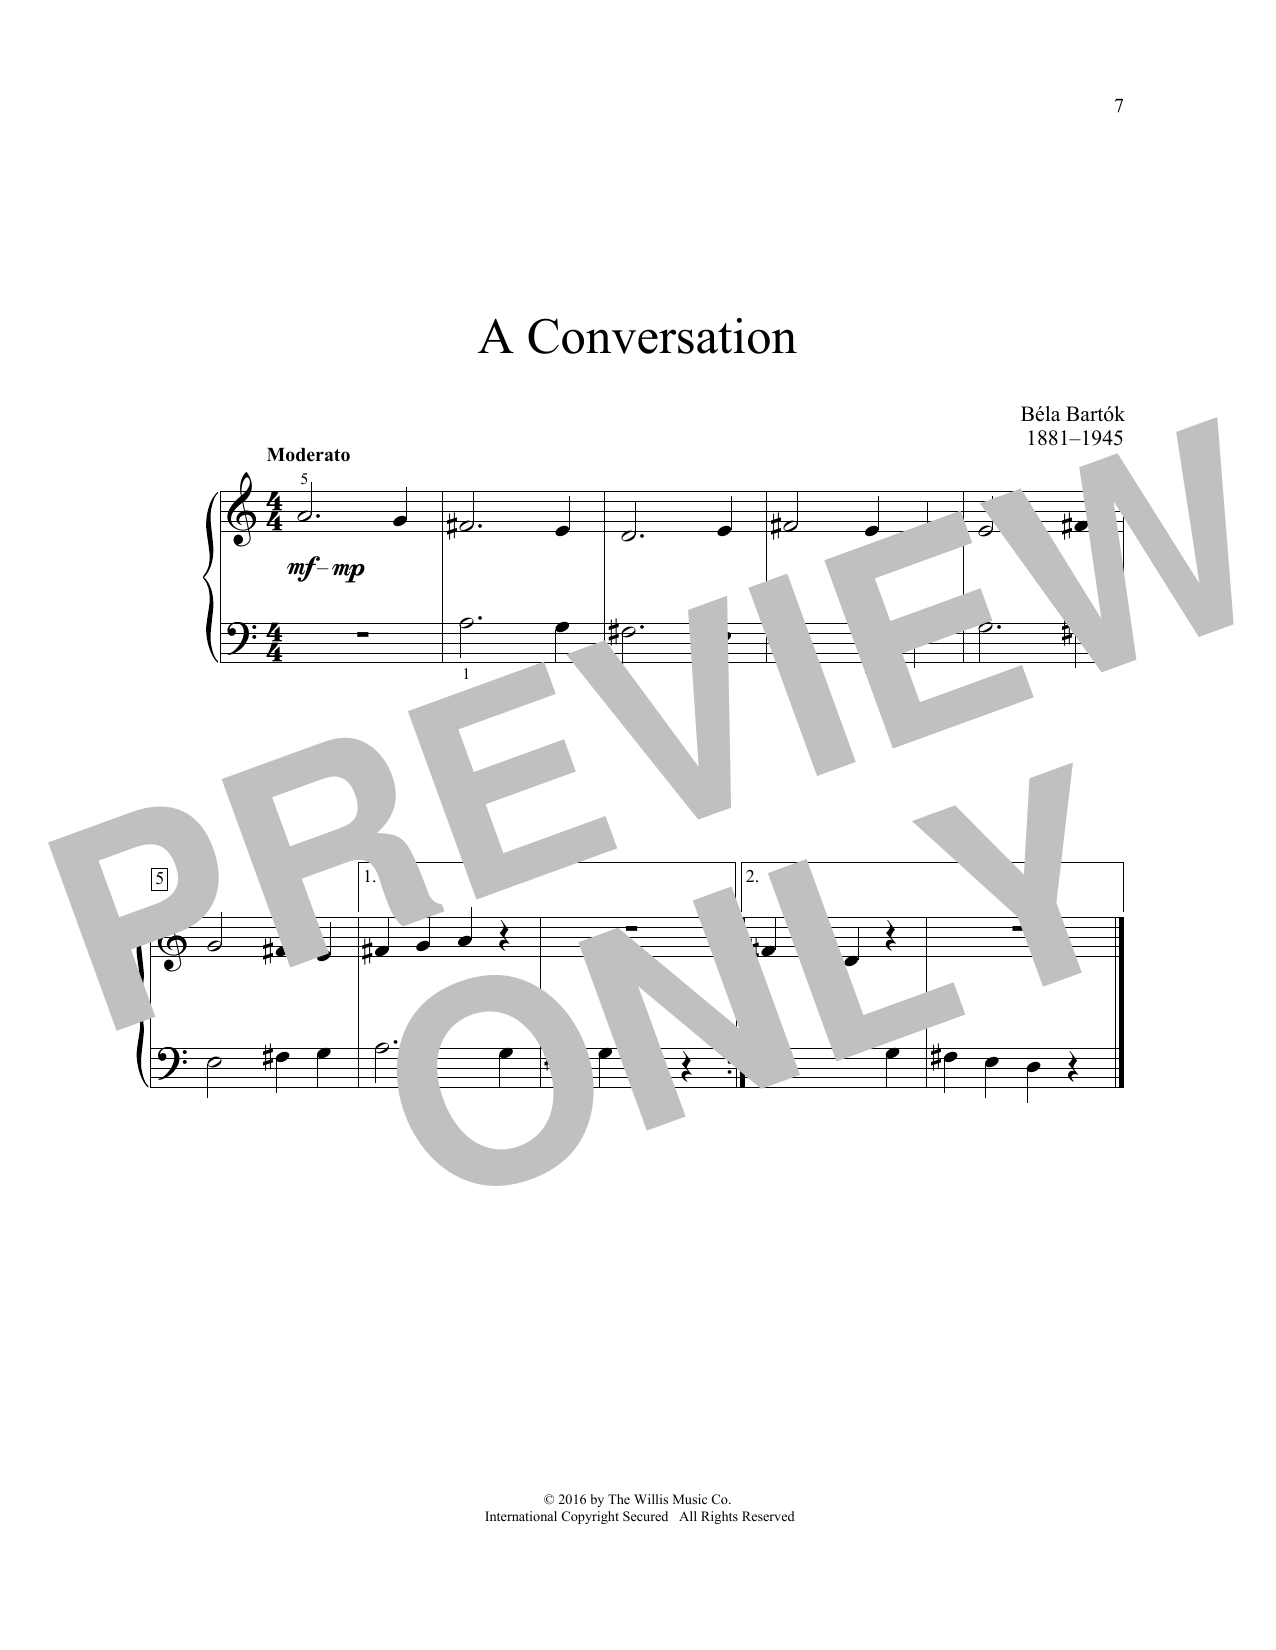 Bela Bartok A Conversation sheet music notes and chords. Download Printable PDF.